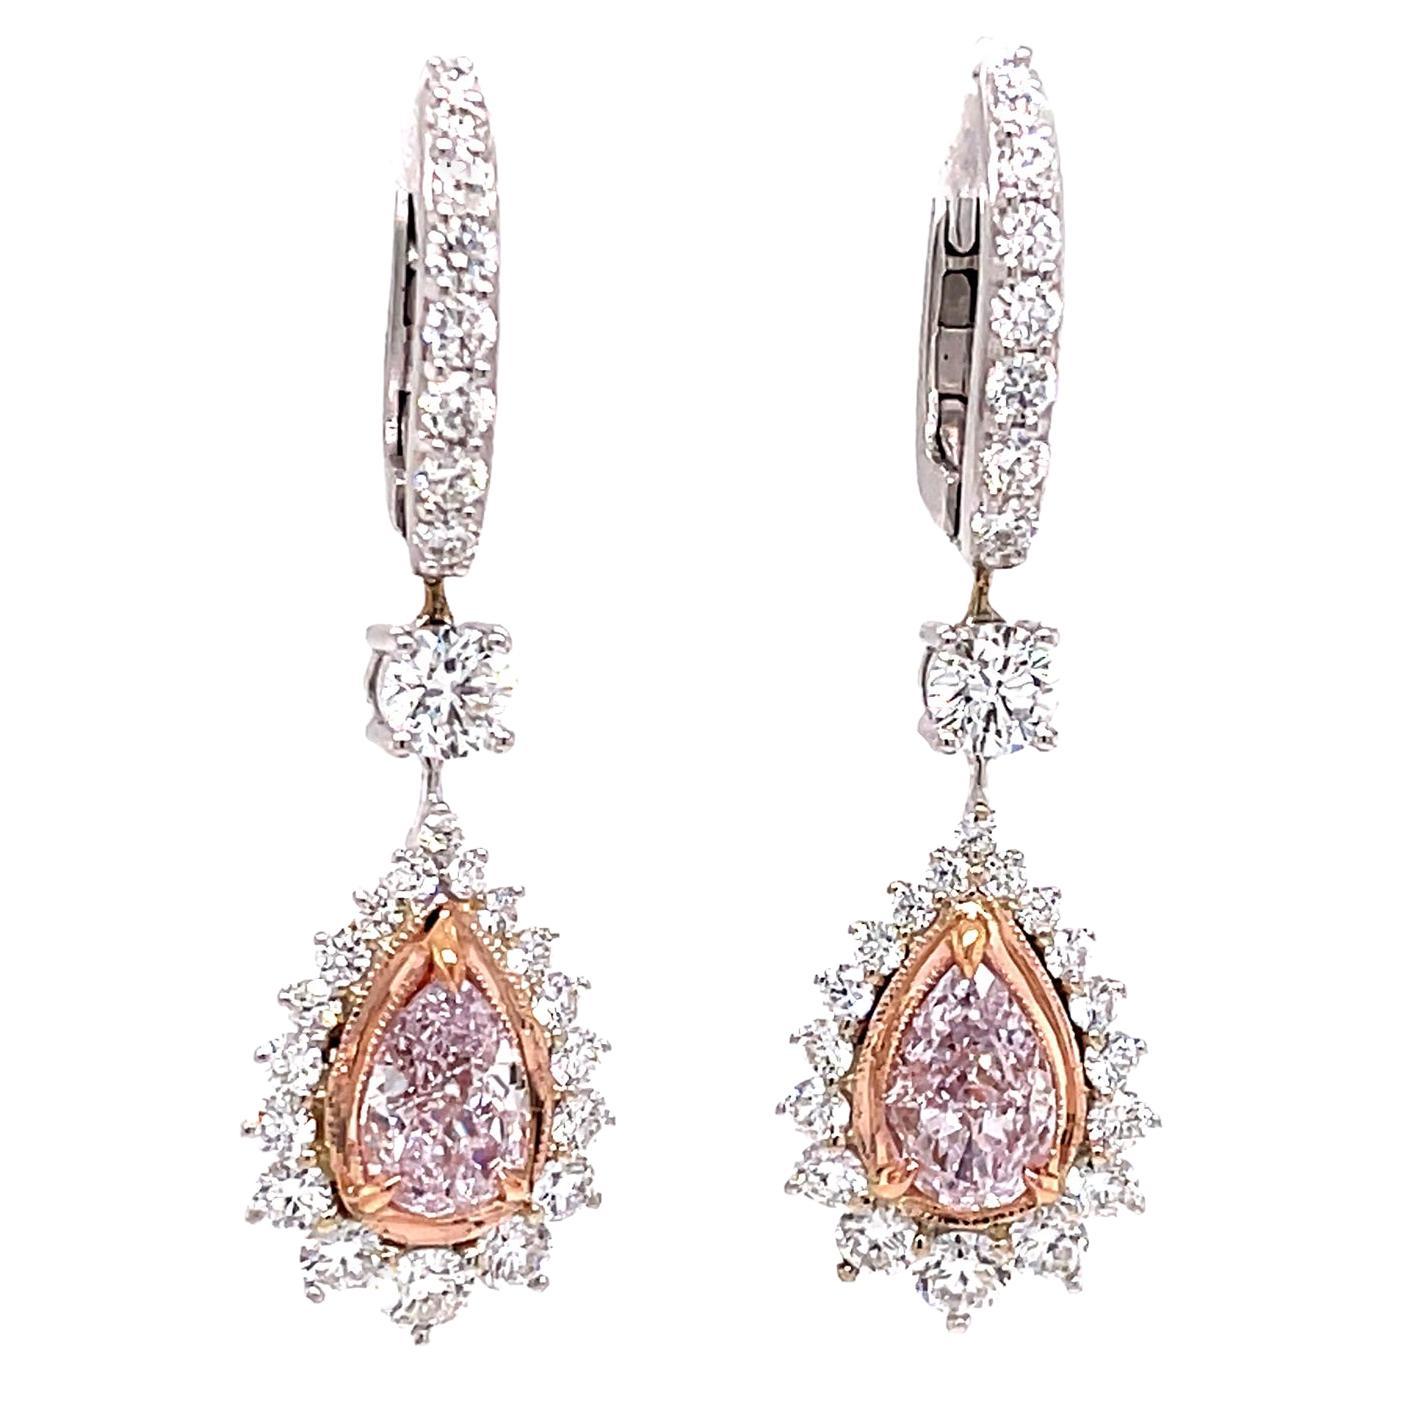 2 Carat Light Pink Diamond Drop Earrings, GIA Certified, Set In 18k White Gold.